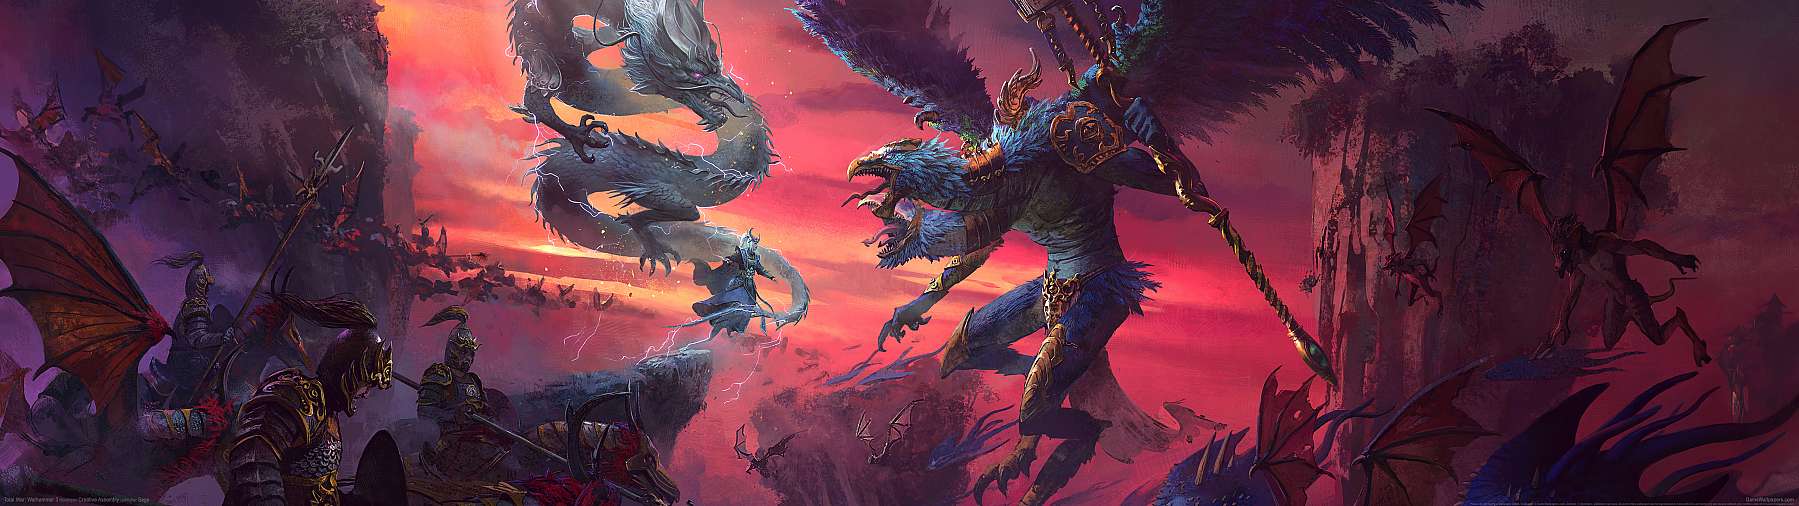 Total War: Warhammer 3 superwide wallpaper or background 02